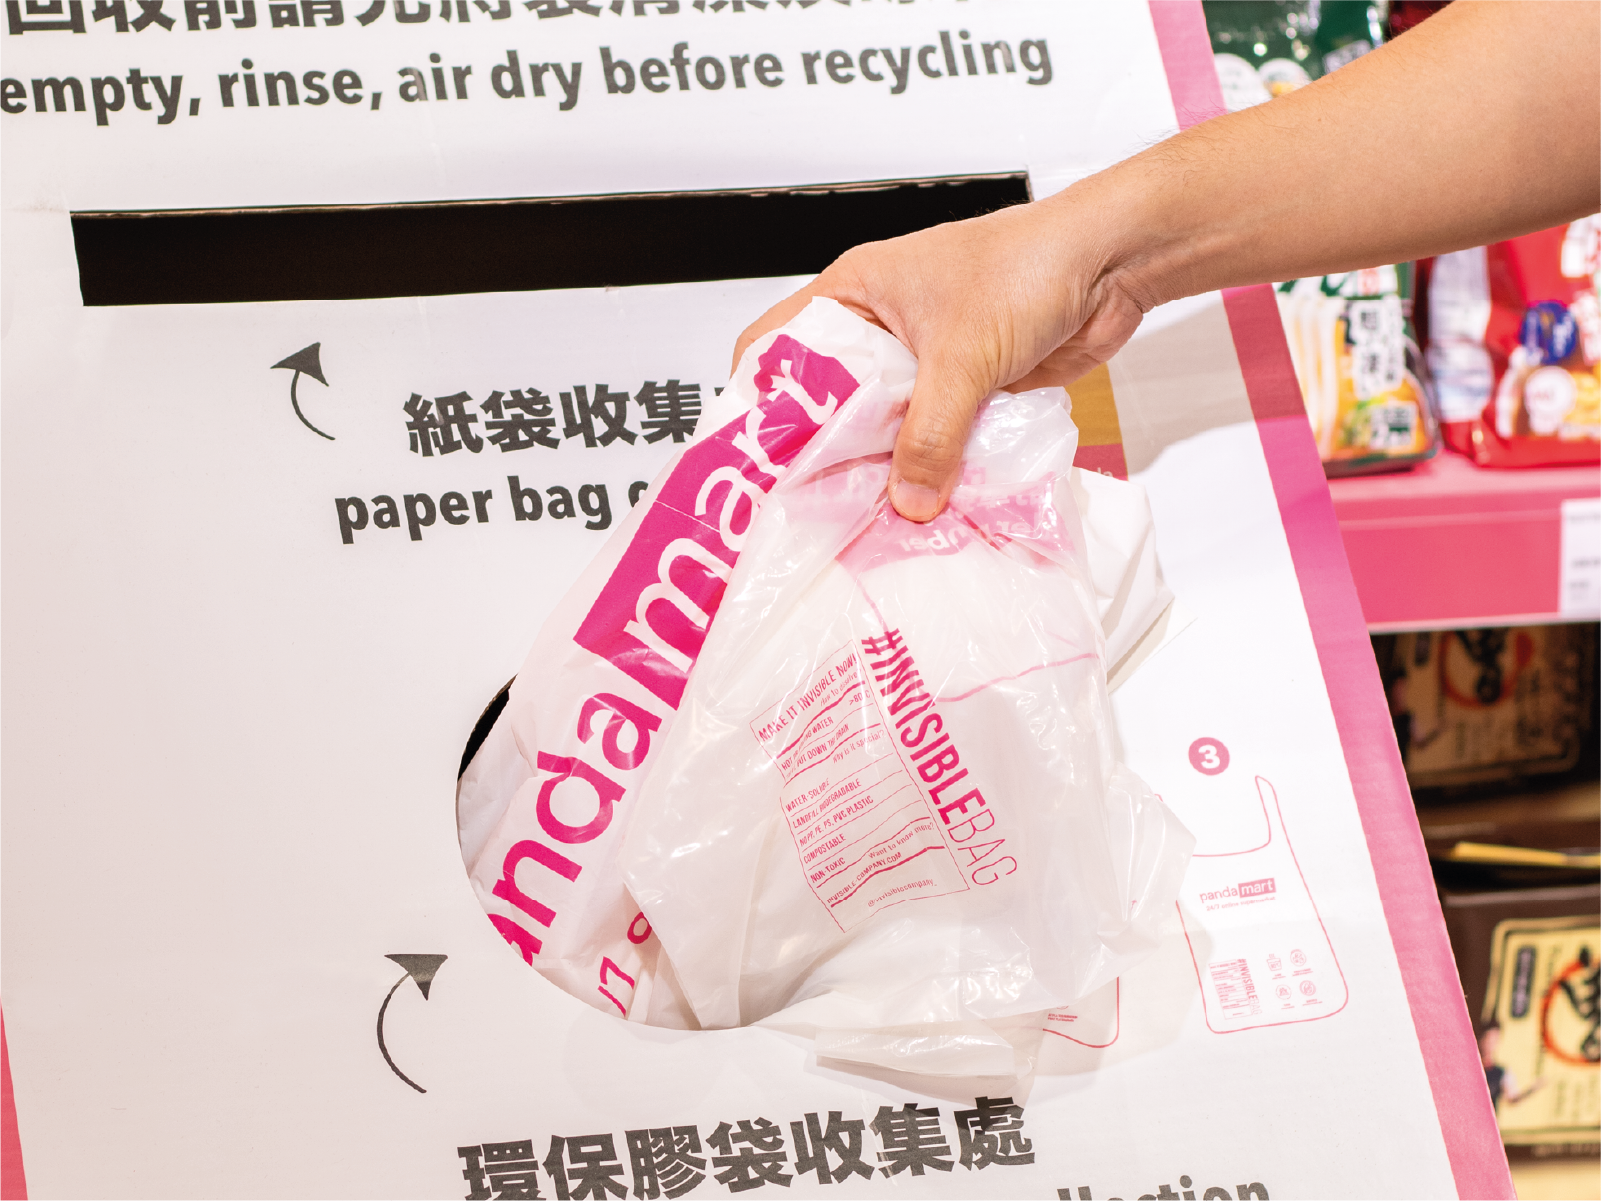 compostable bag collection program at pandamart